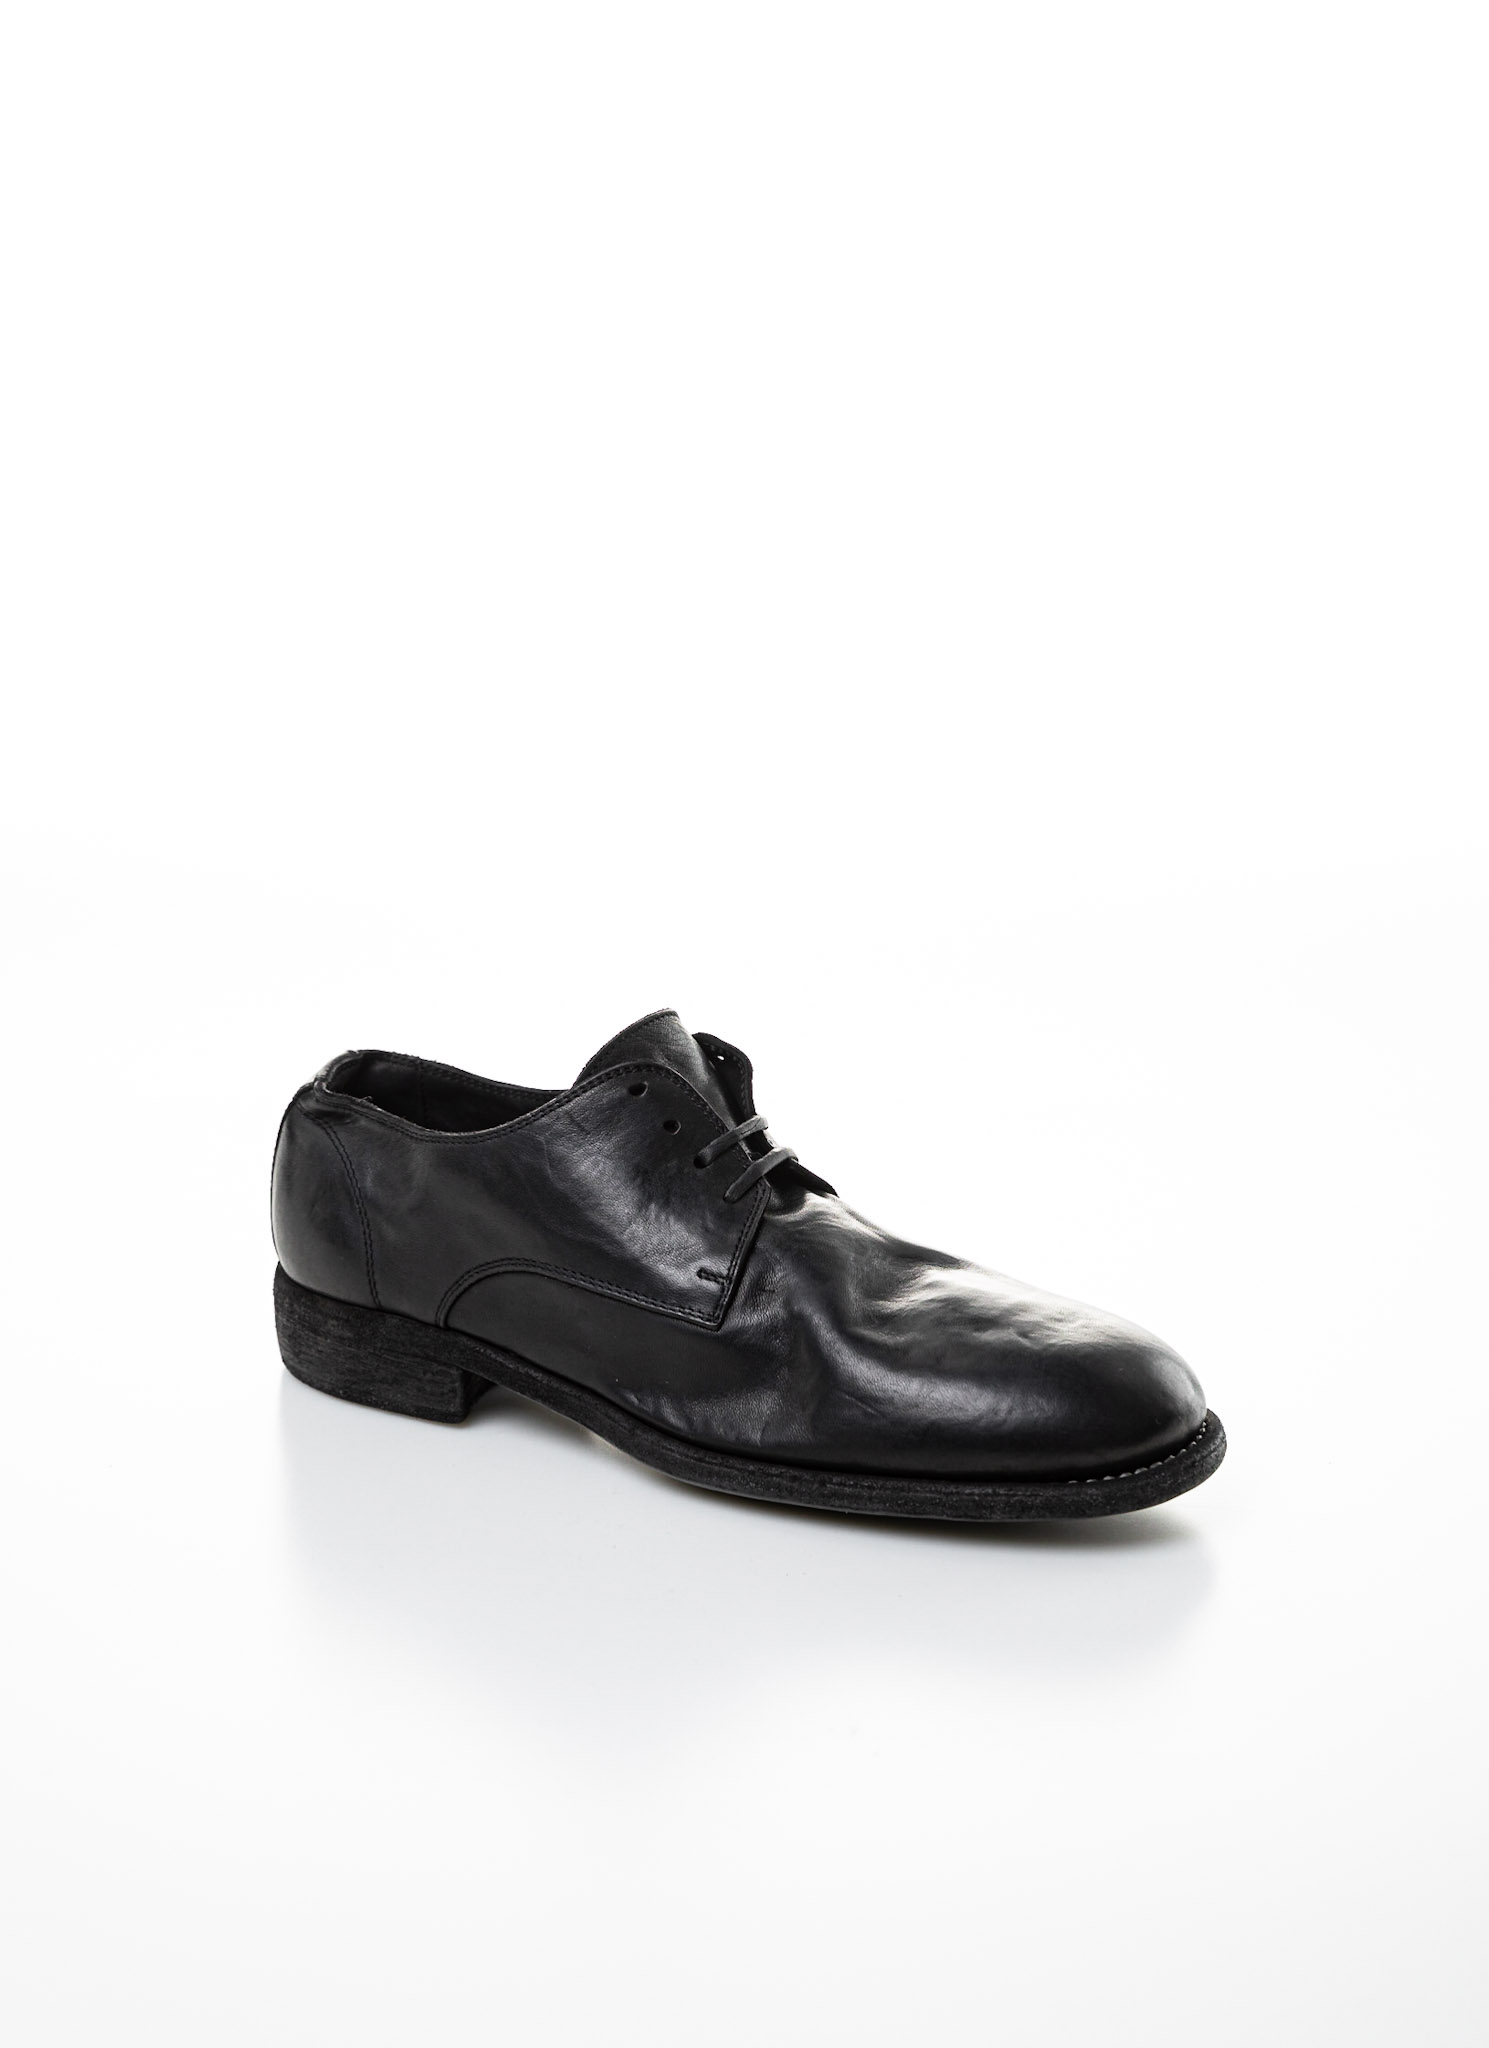 hide-m | GUIDI 992, Classic Derby Shoe black horse leather